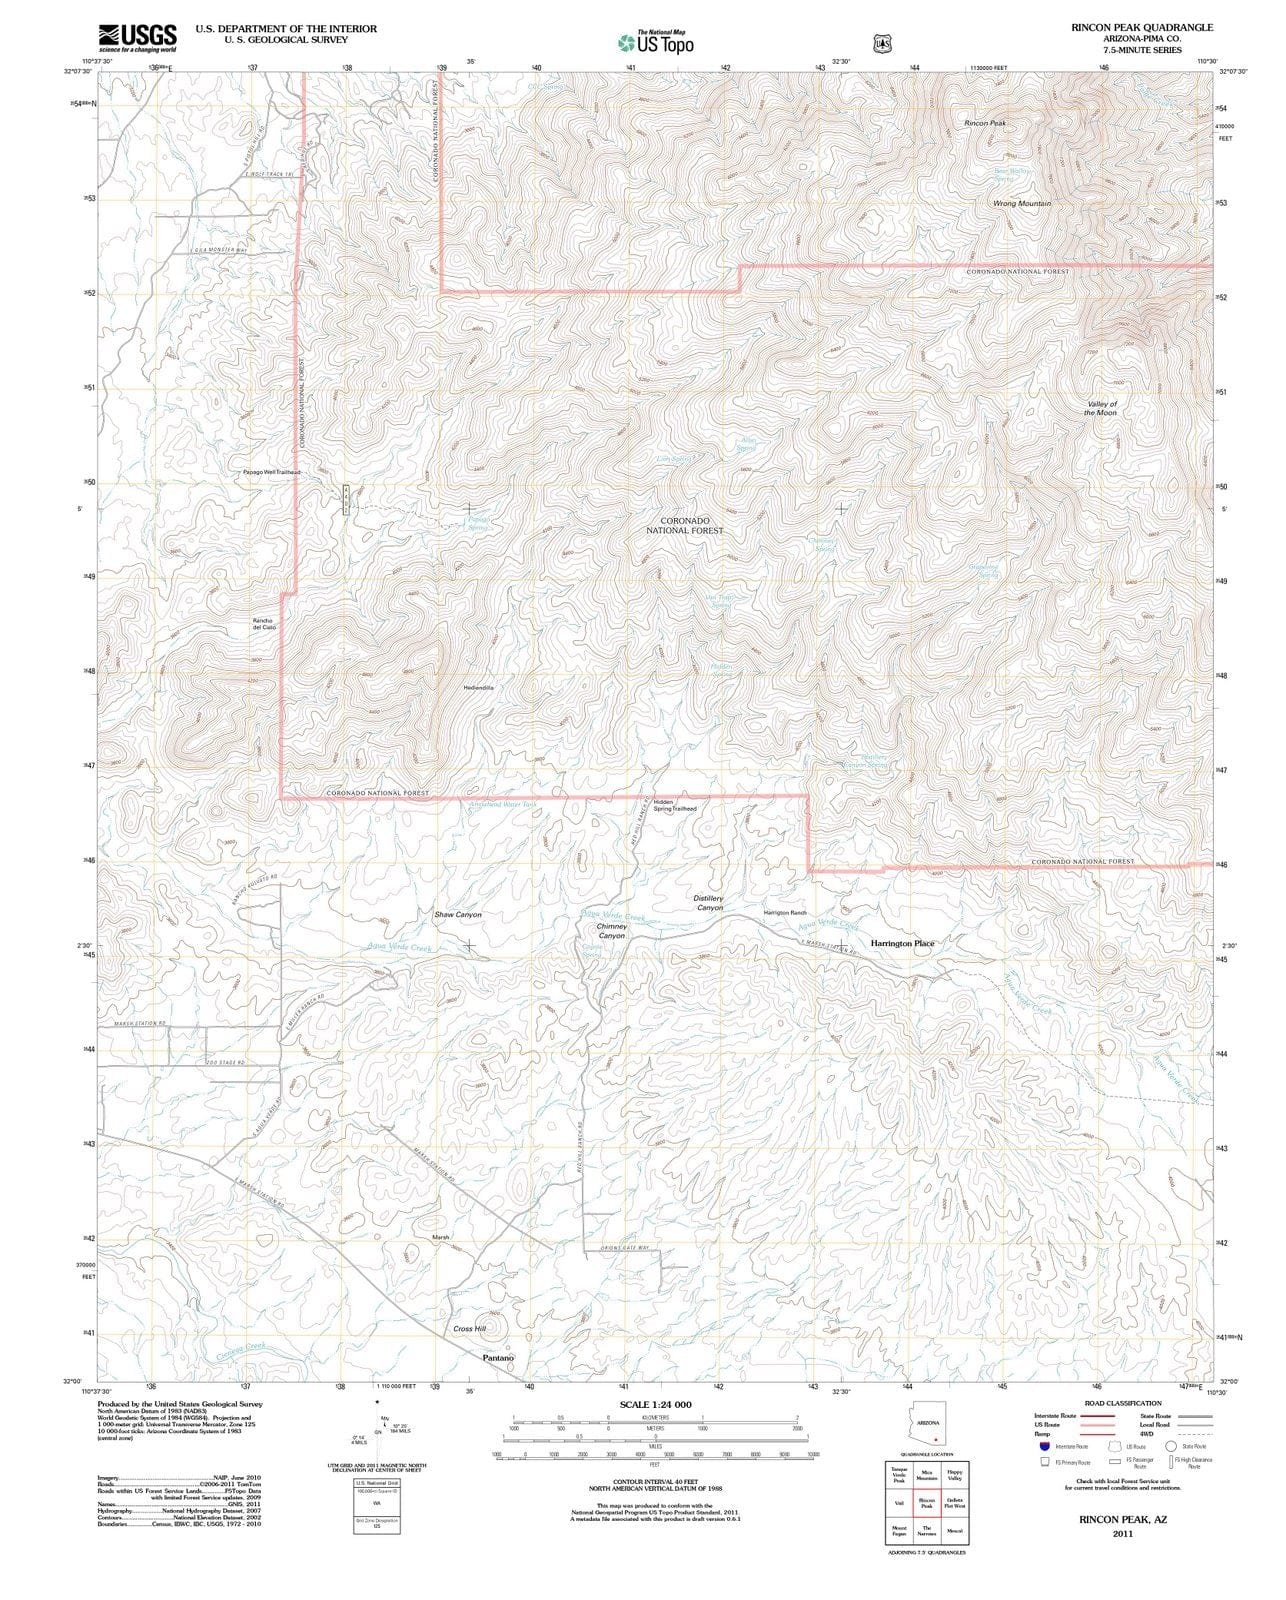 2011 Rincon Peak, AZ - Arizona - USGS Topographic Map